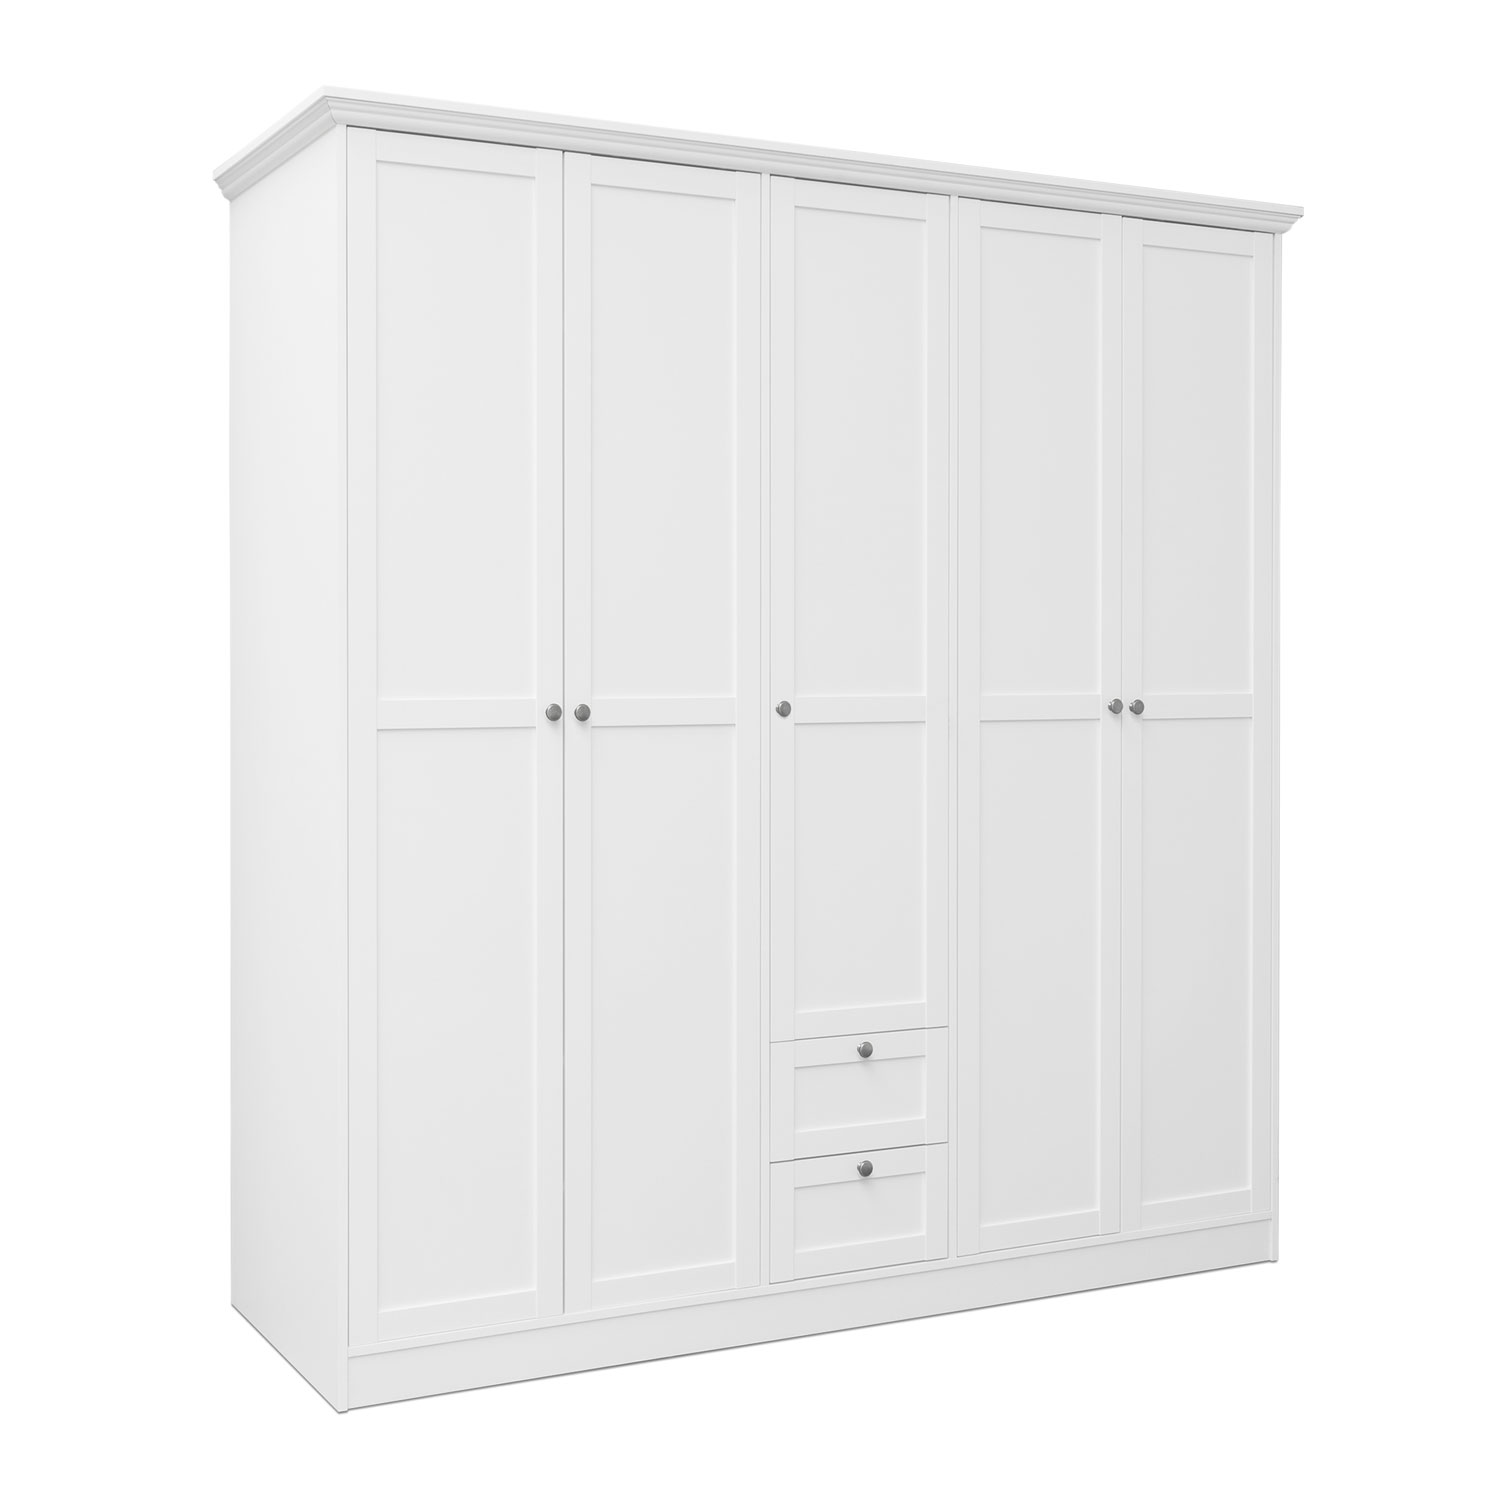 Wardrobe Cupboard White with Drawers 5 Doors Bedroom Wardrobe Furniture Storage Closet